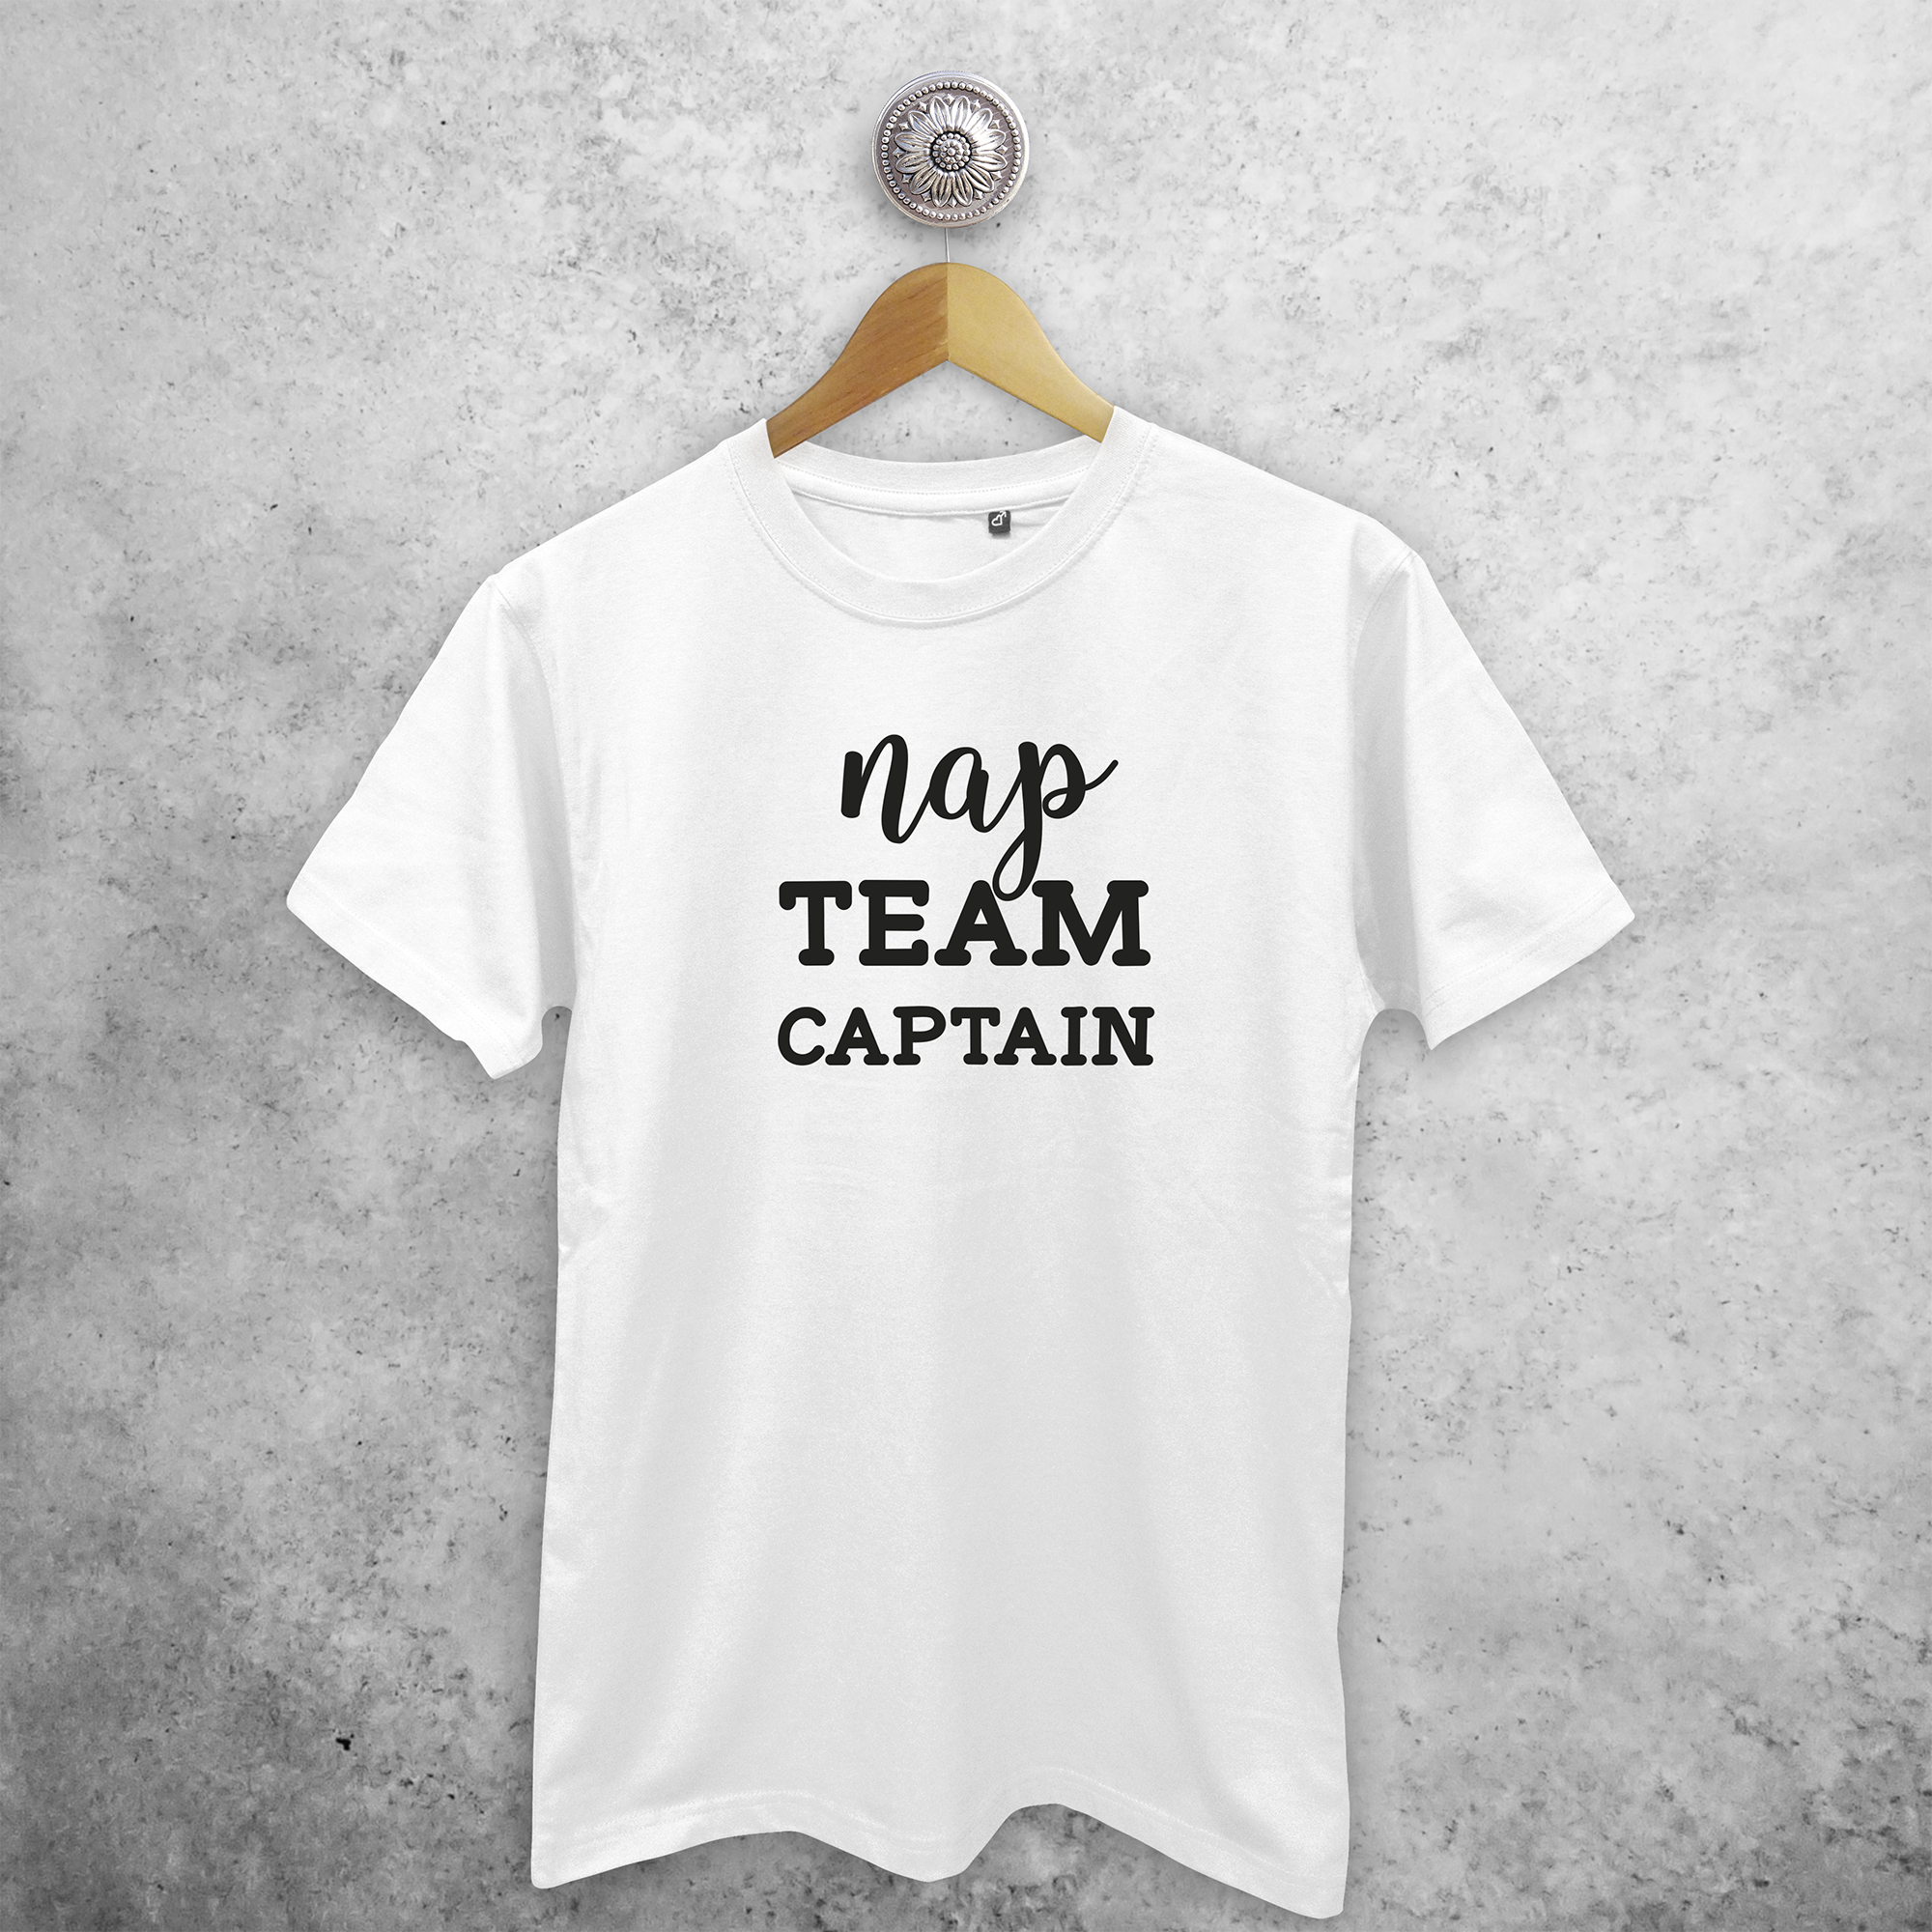 'Nap team captain' adult shirt